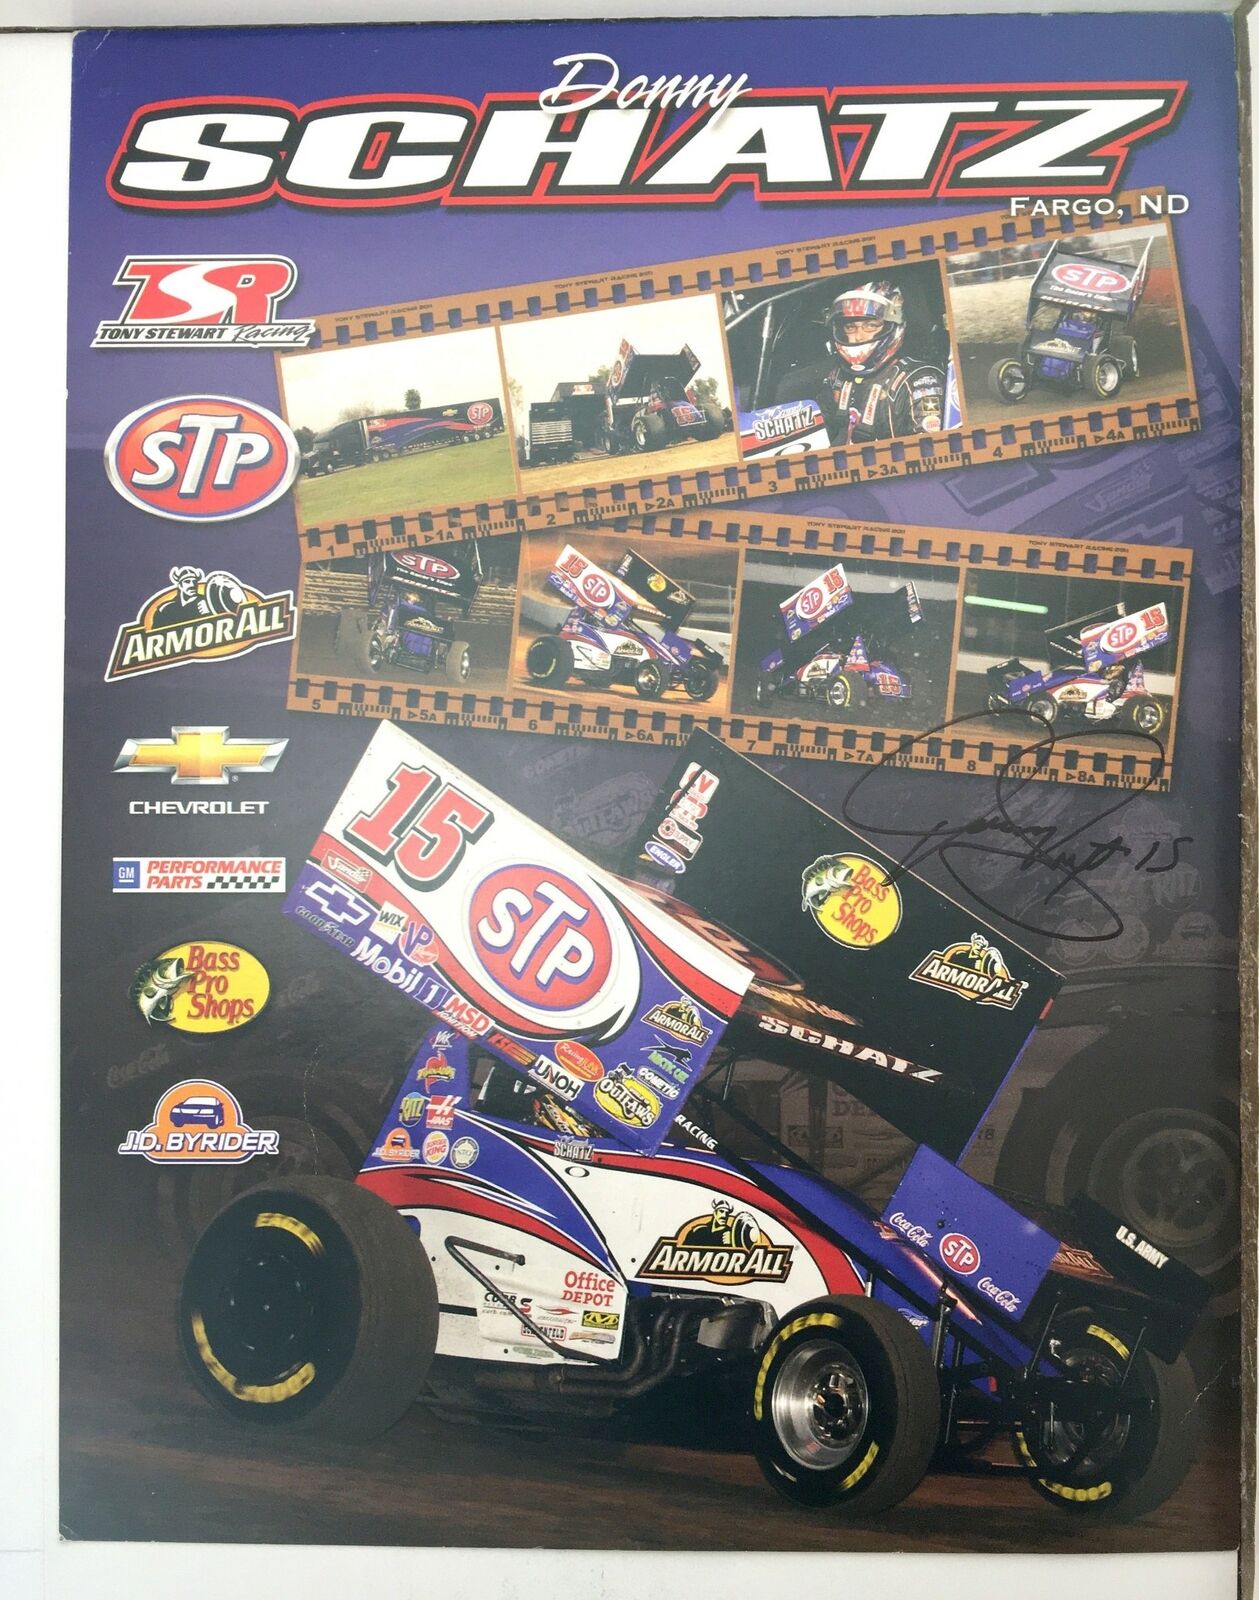 Danny Schatz Signed 8.5x11 Photo Poster painting Promo Hero Card Postcard NASCAR  SHIP Auto